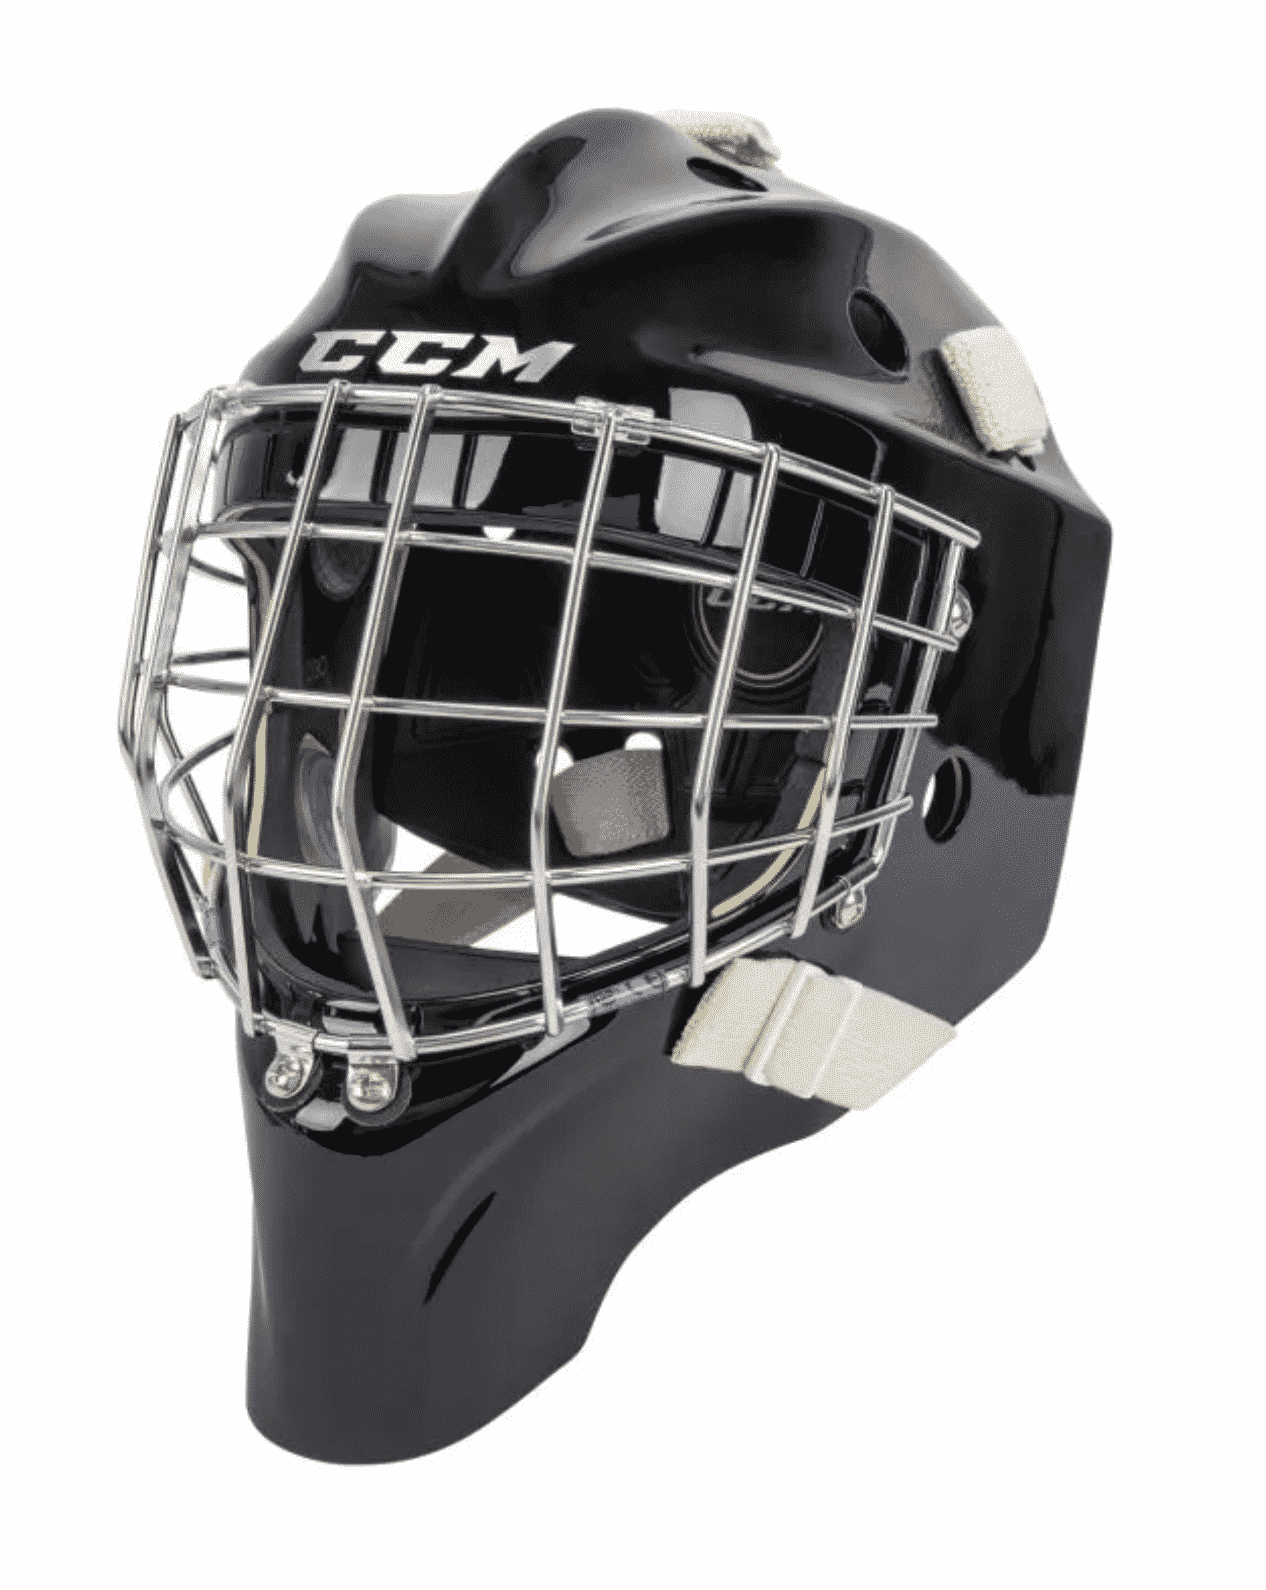 Top 5 goalie masks – The Carillon